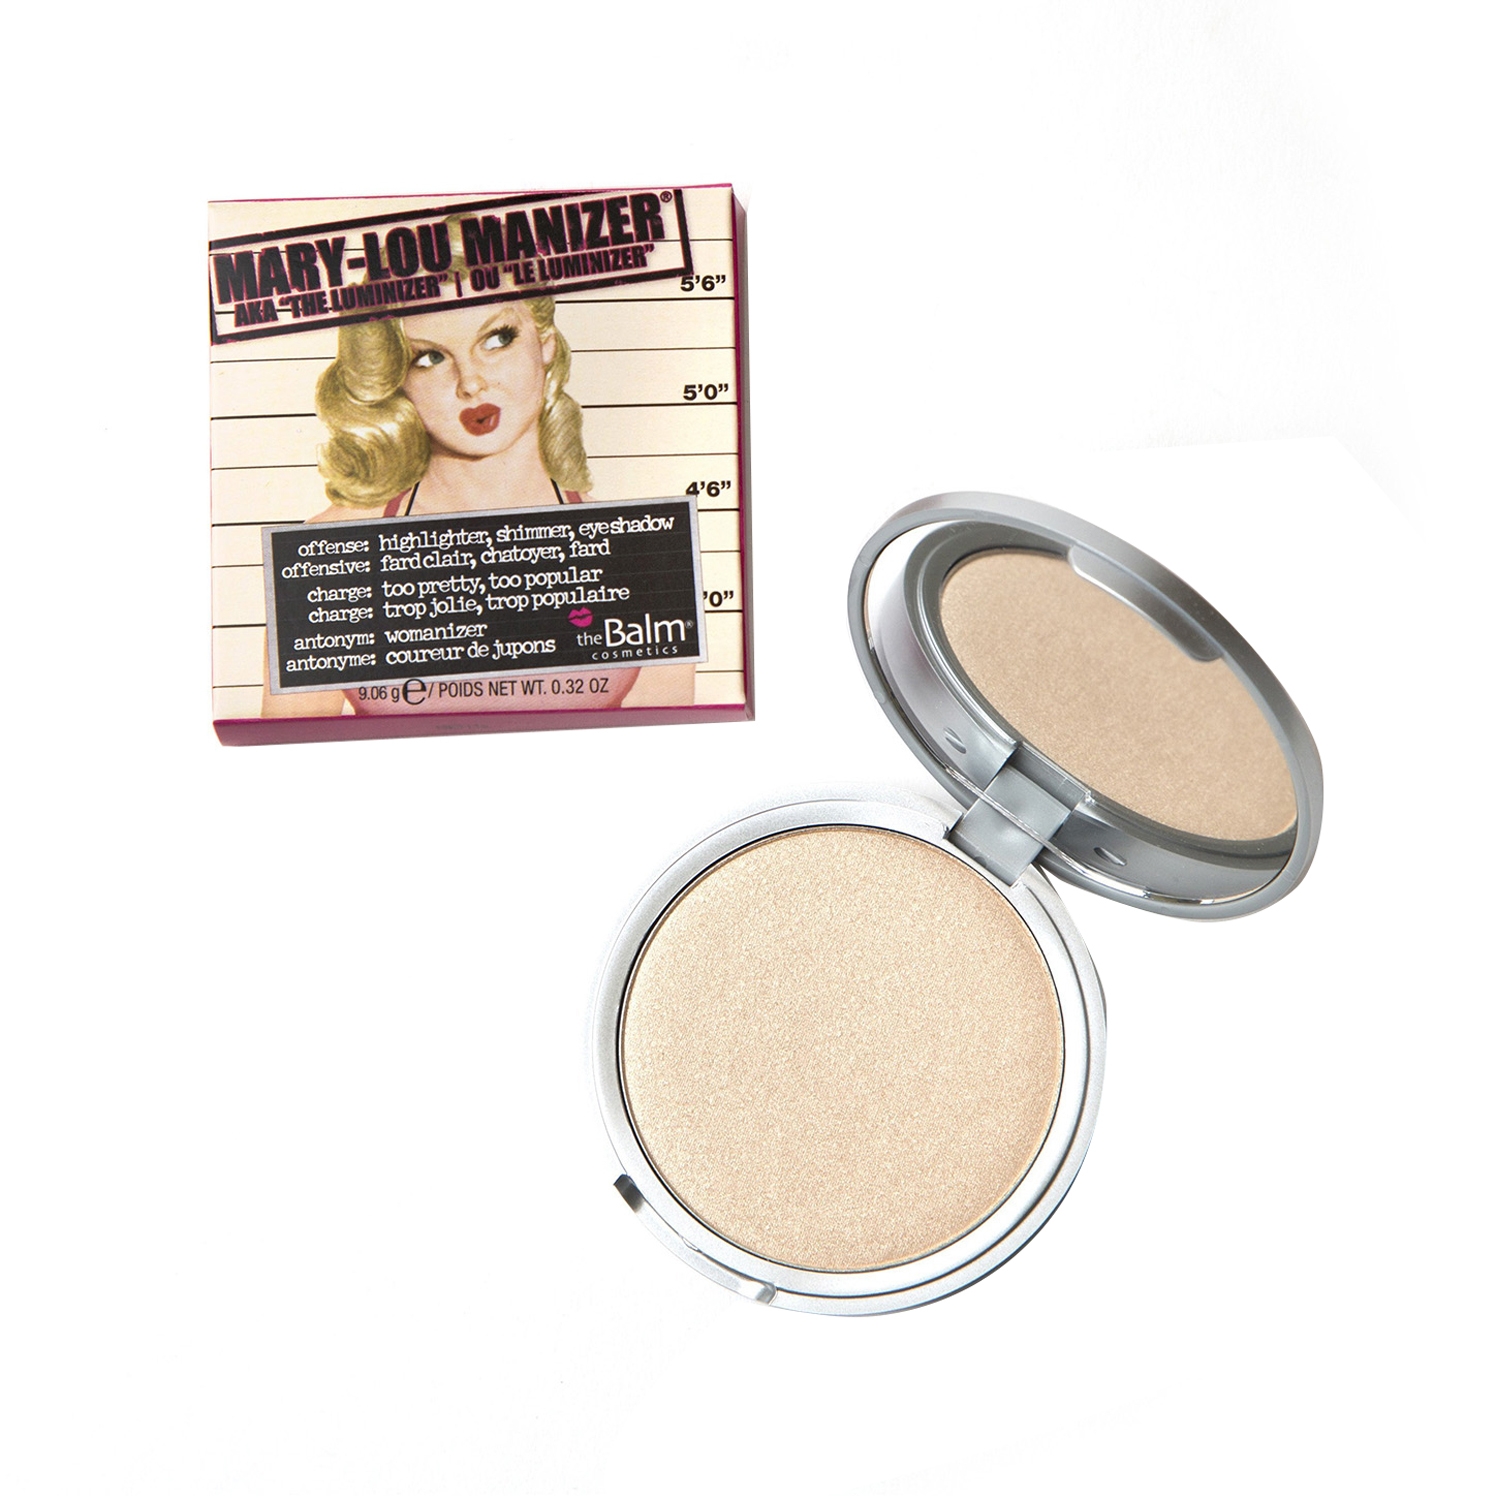 theBalm Cosmetics | theBalm Cosmetics Manizer Highlighter Eyeshadow - Mary-Lou (9.06g)